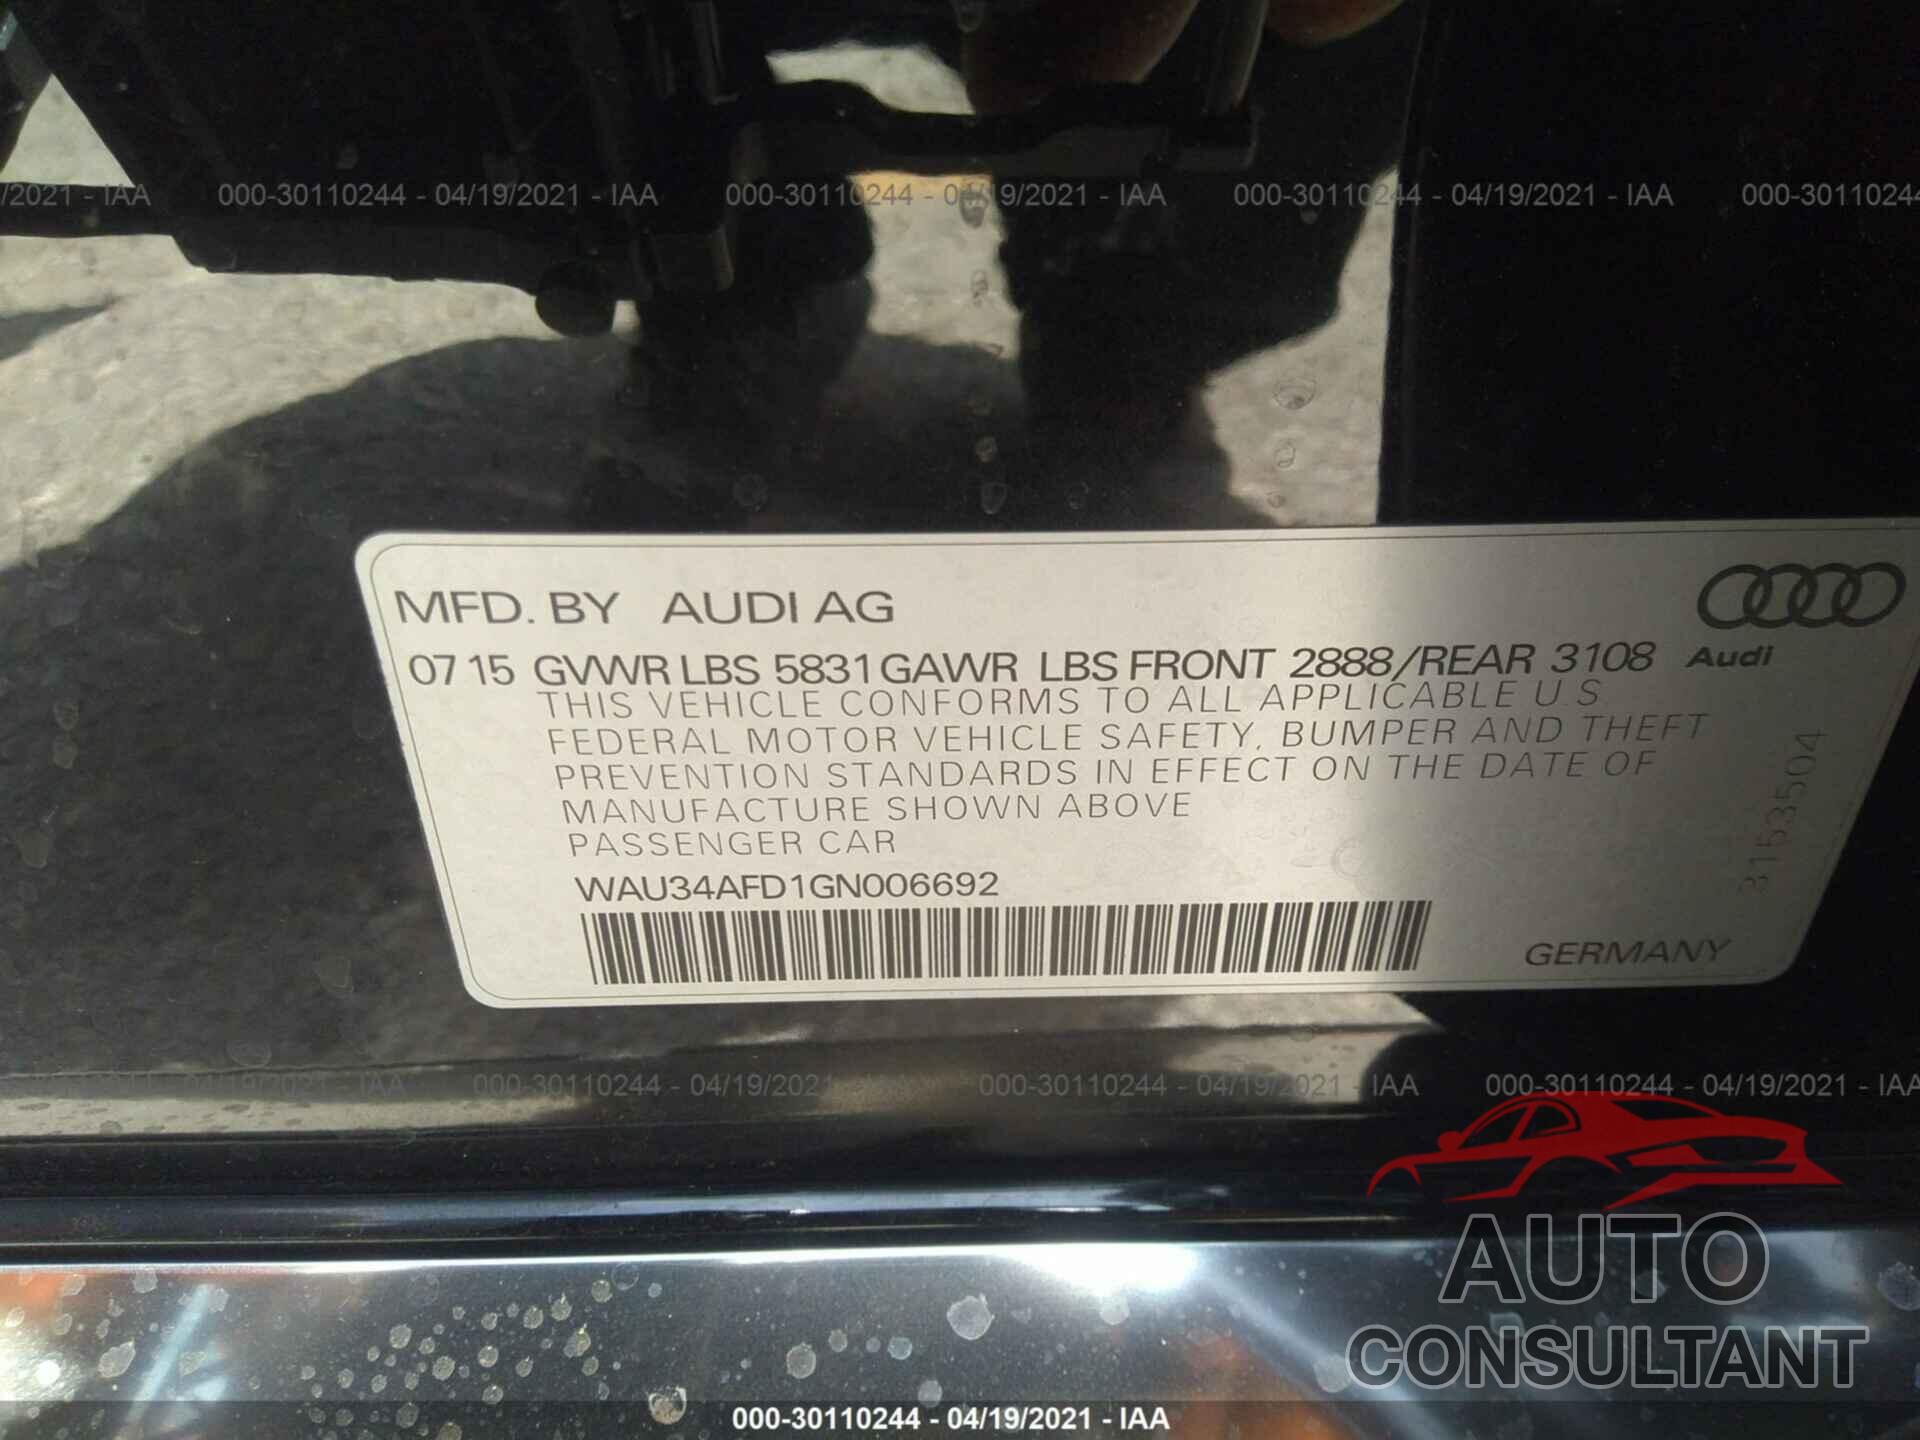 AUDI A8 L 2016 - WAU34AFD1GN006692